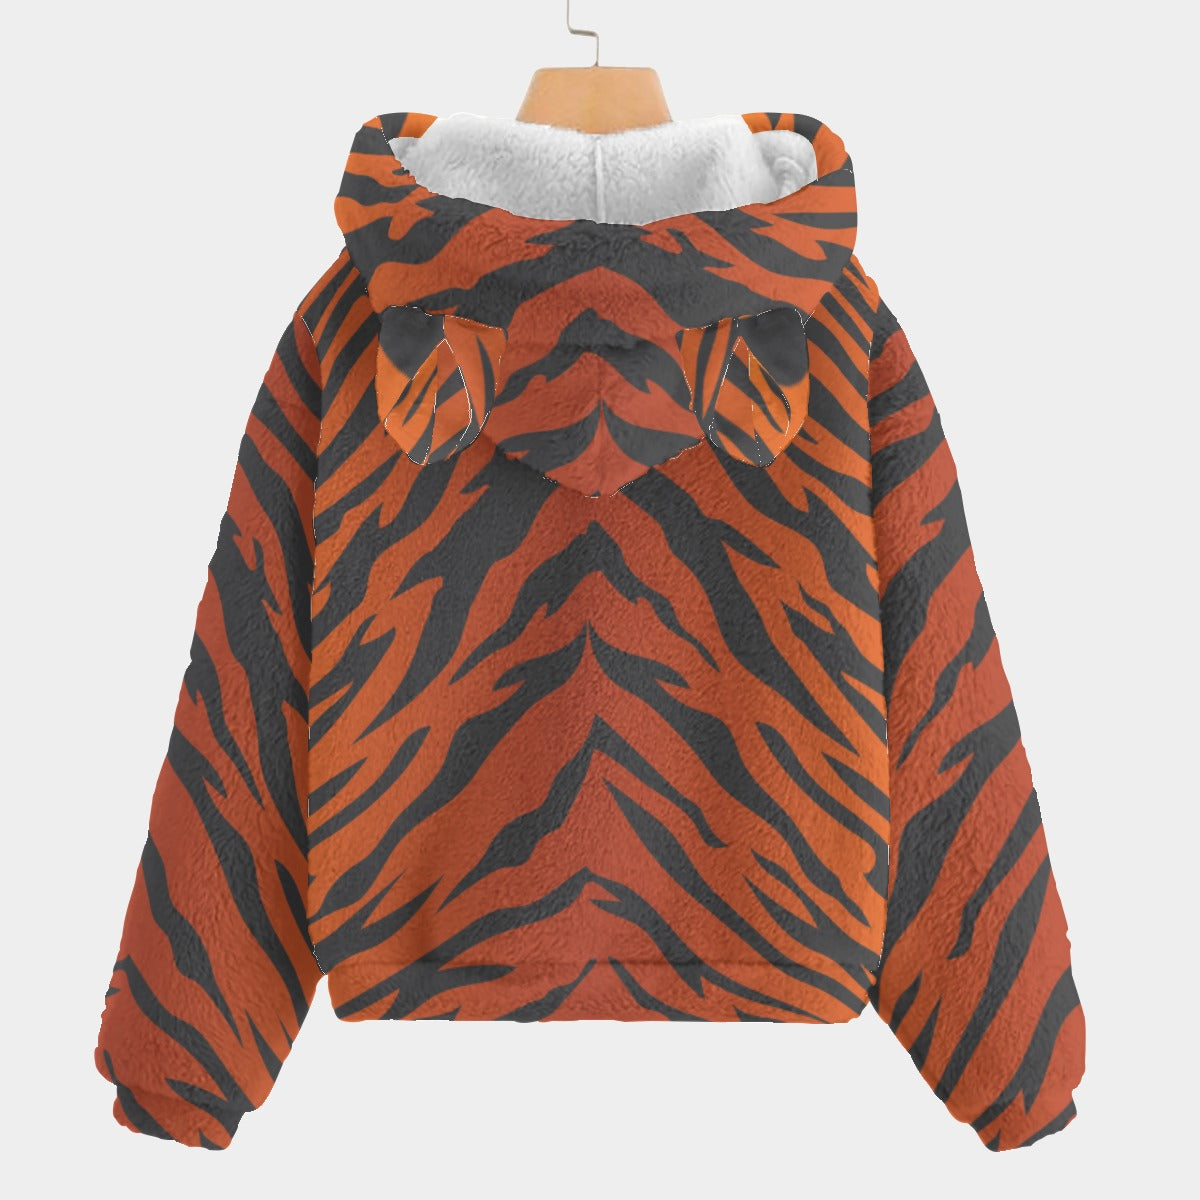 Azeeda 'Tiger' Children's Hoodie/Hooded Sweater 7-8 Years (KO00022838)